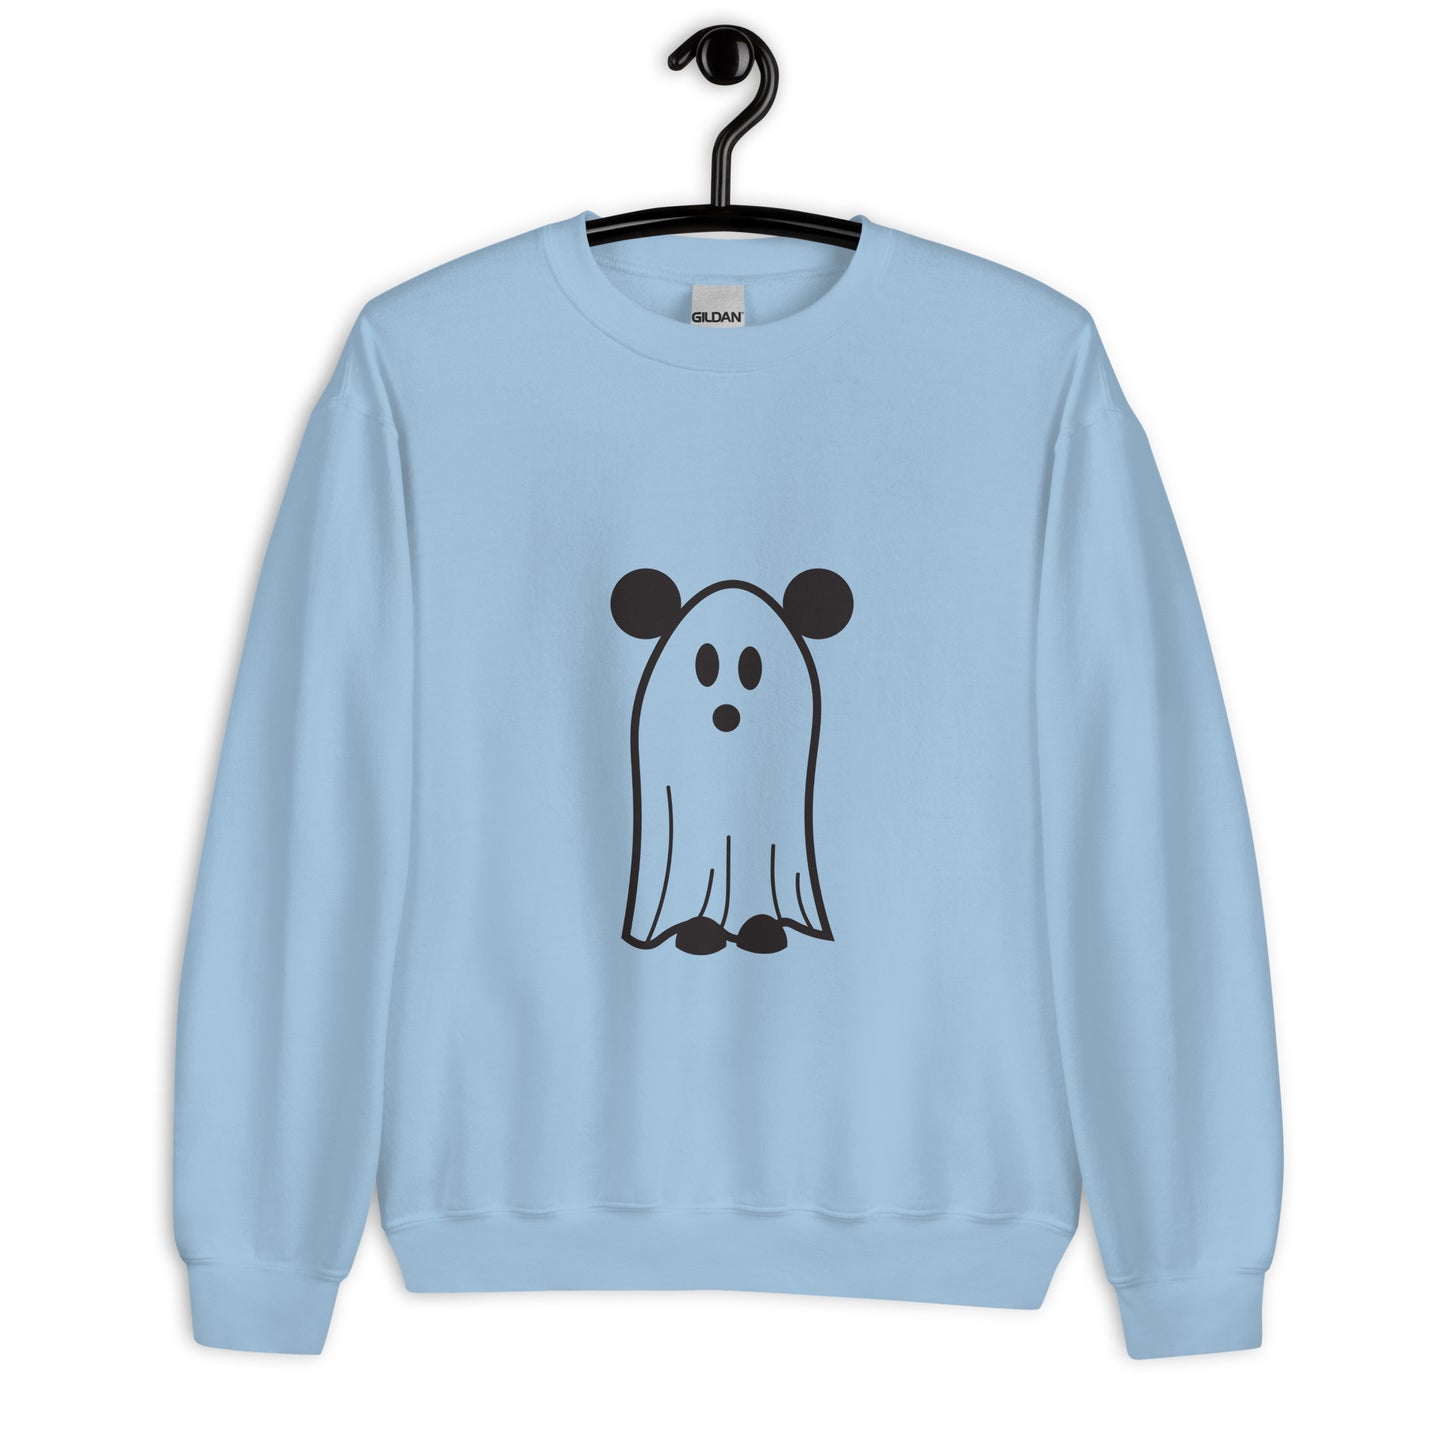 Ghost Mickey - Unisex Sweatshirt